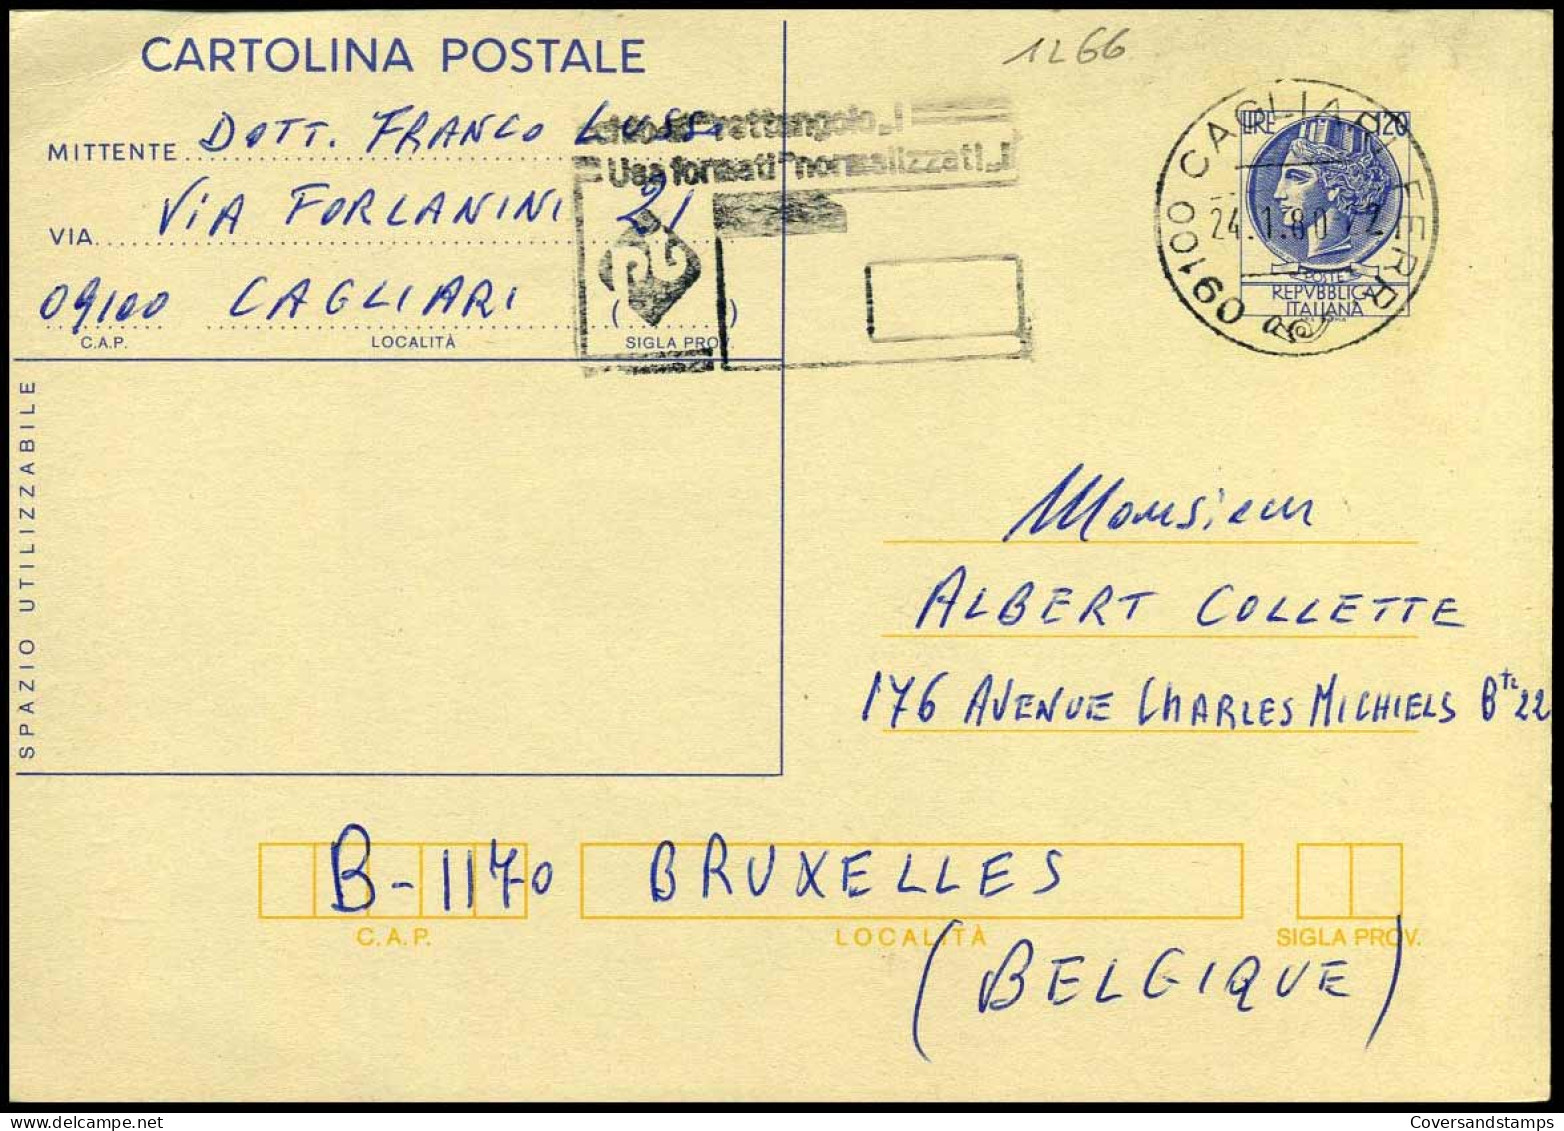 Cartolina Postale - To Brussels, Belgium - 1971-80: Marcophilie